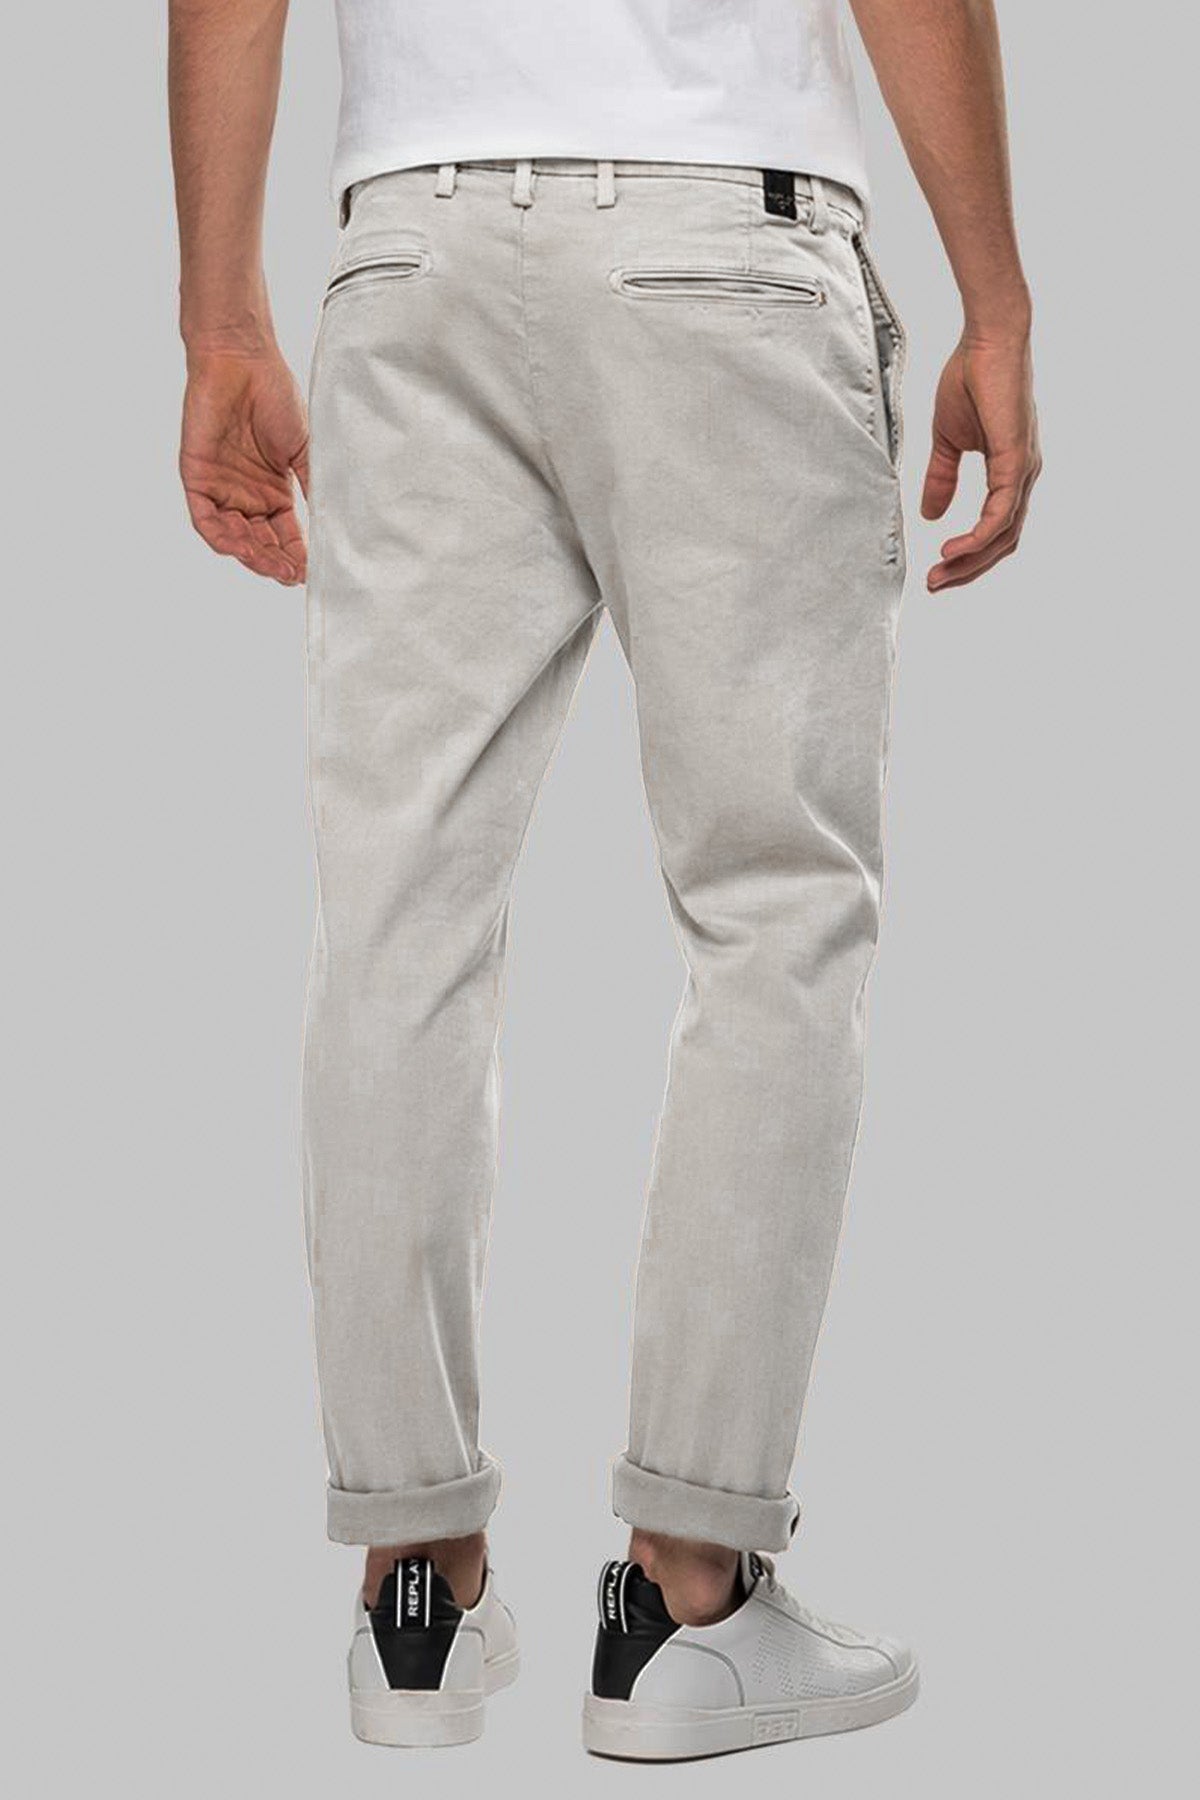 Replay Benni Hyperflex Yandan Cepli Regular Fit Pantolon-Libas Trendy Fashion Store